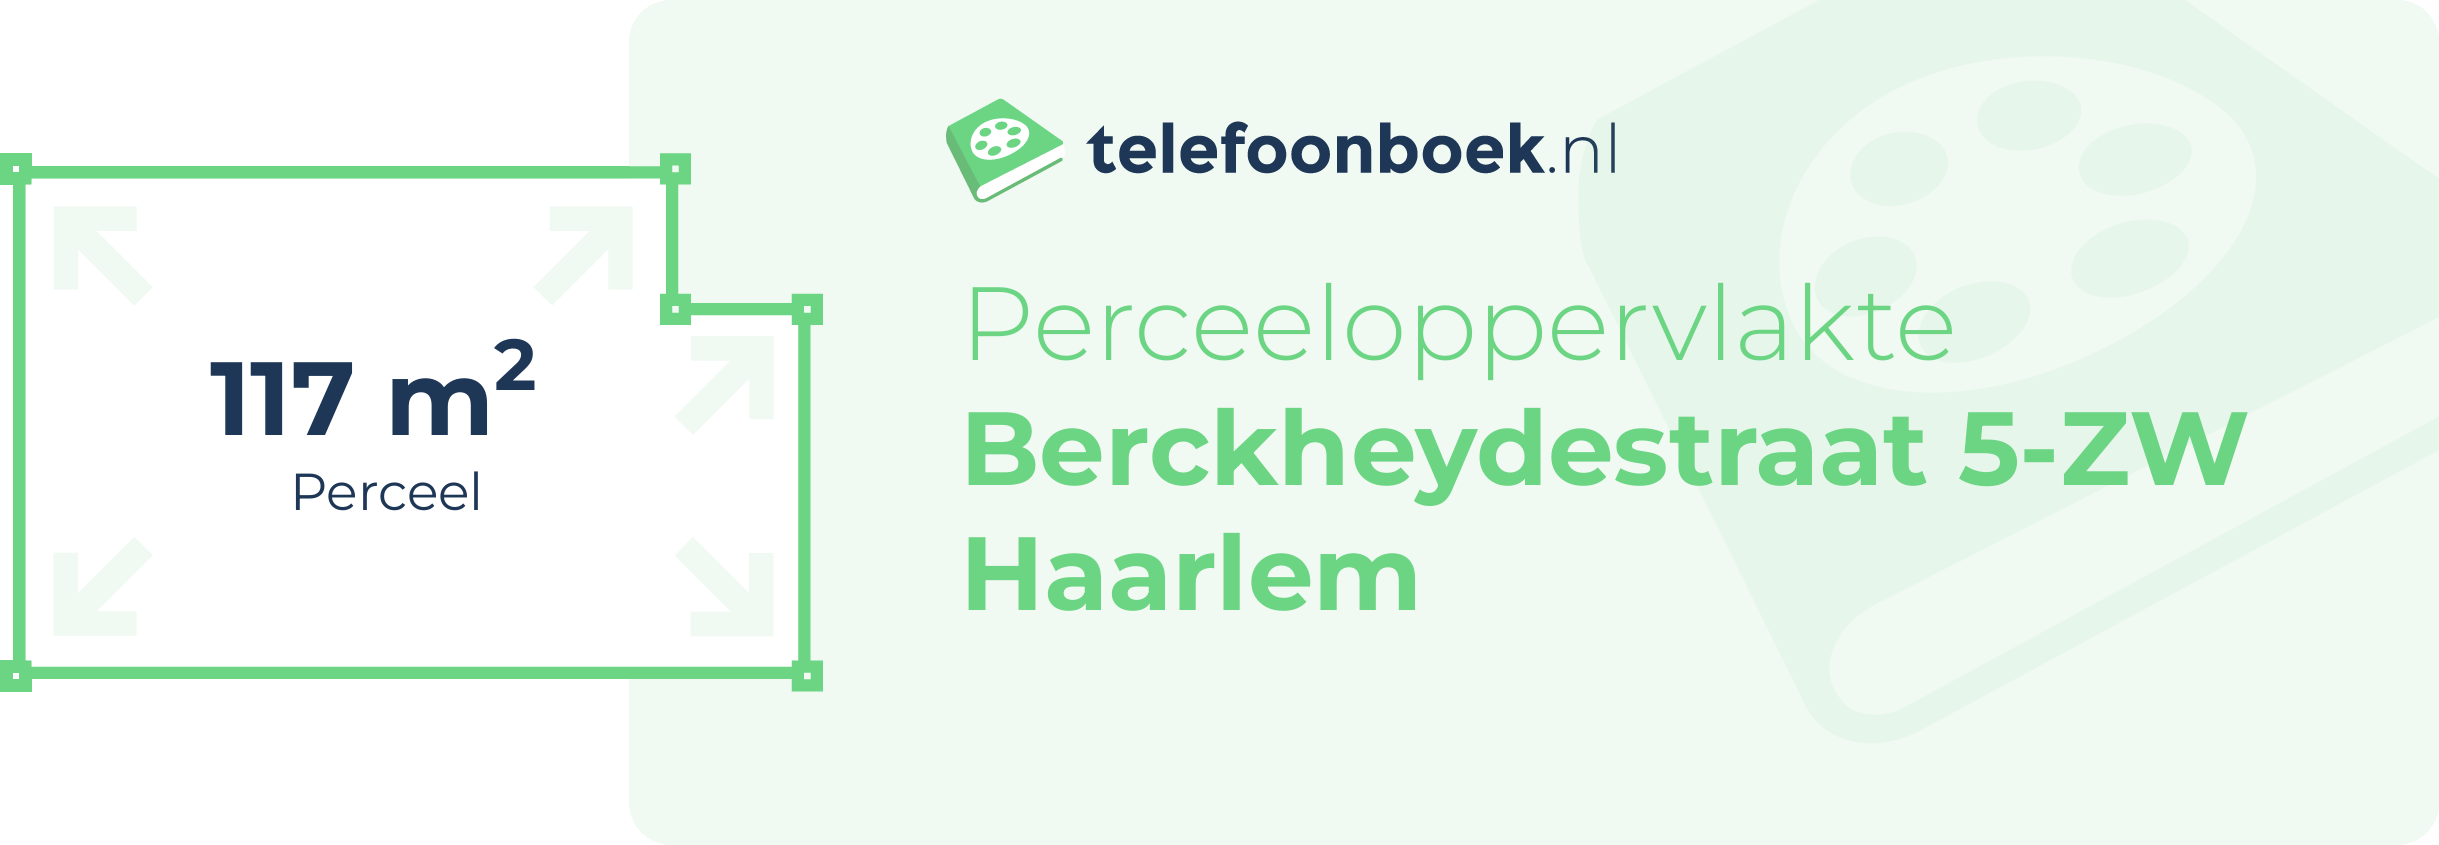 Perceeloppervlakte Berckheydestraat 5-ZW Haarlem